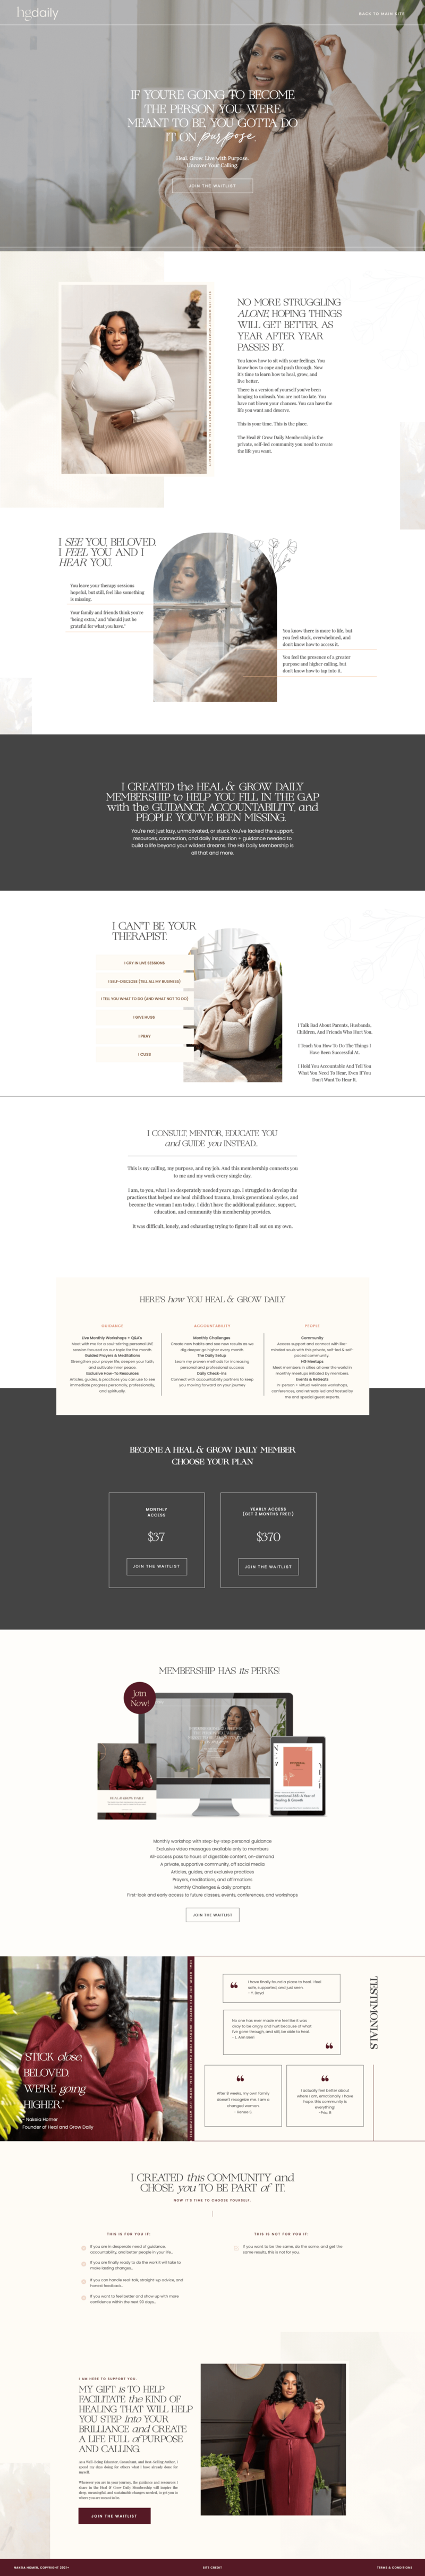 mockup of showit website design for a self-help author